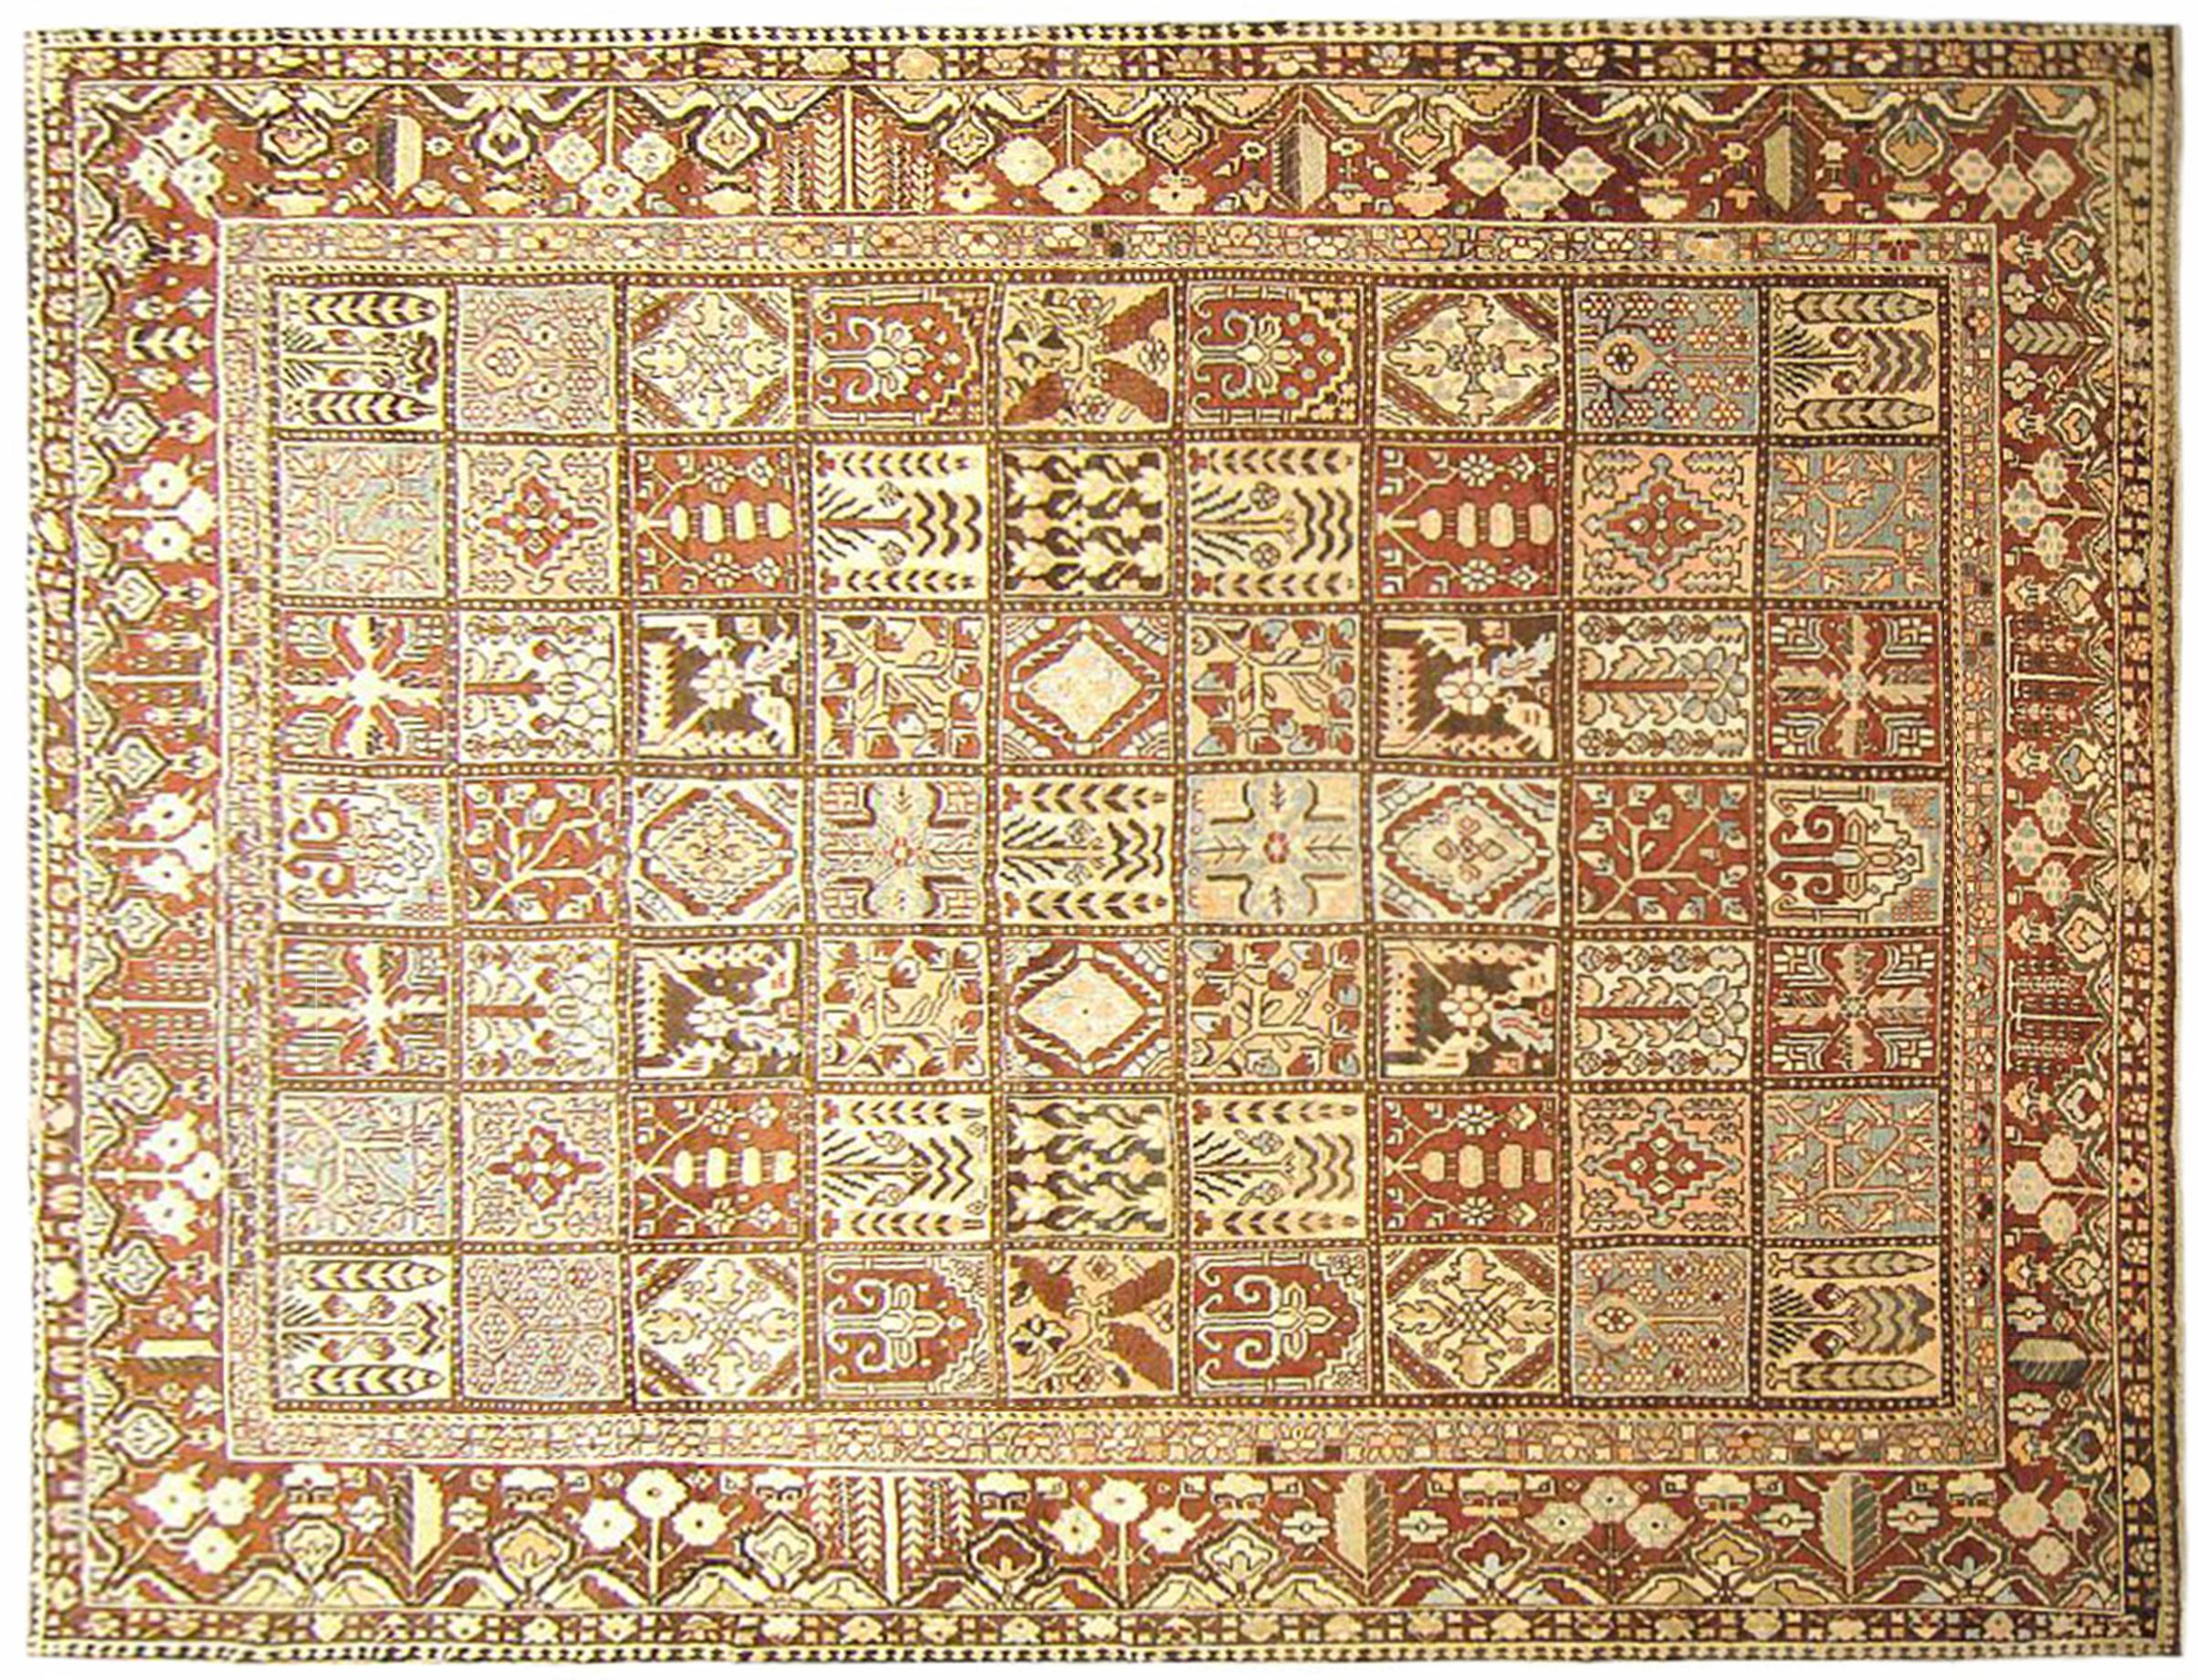 Vintage Persian Baktiari Oriental Rug, Square size

A vintage Baktiari oriental rug, size 12'8